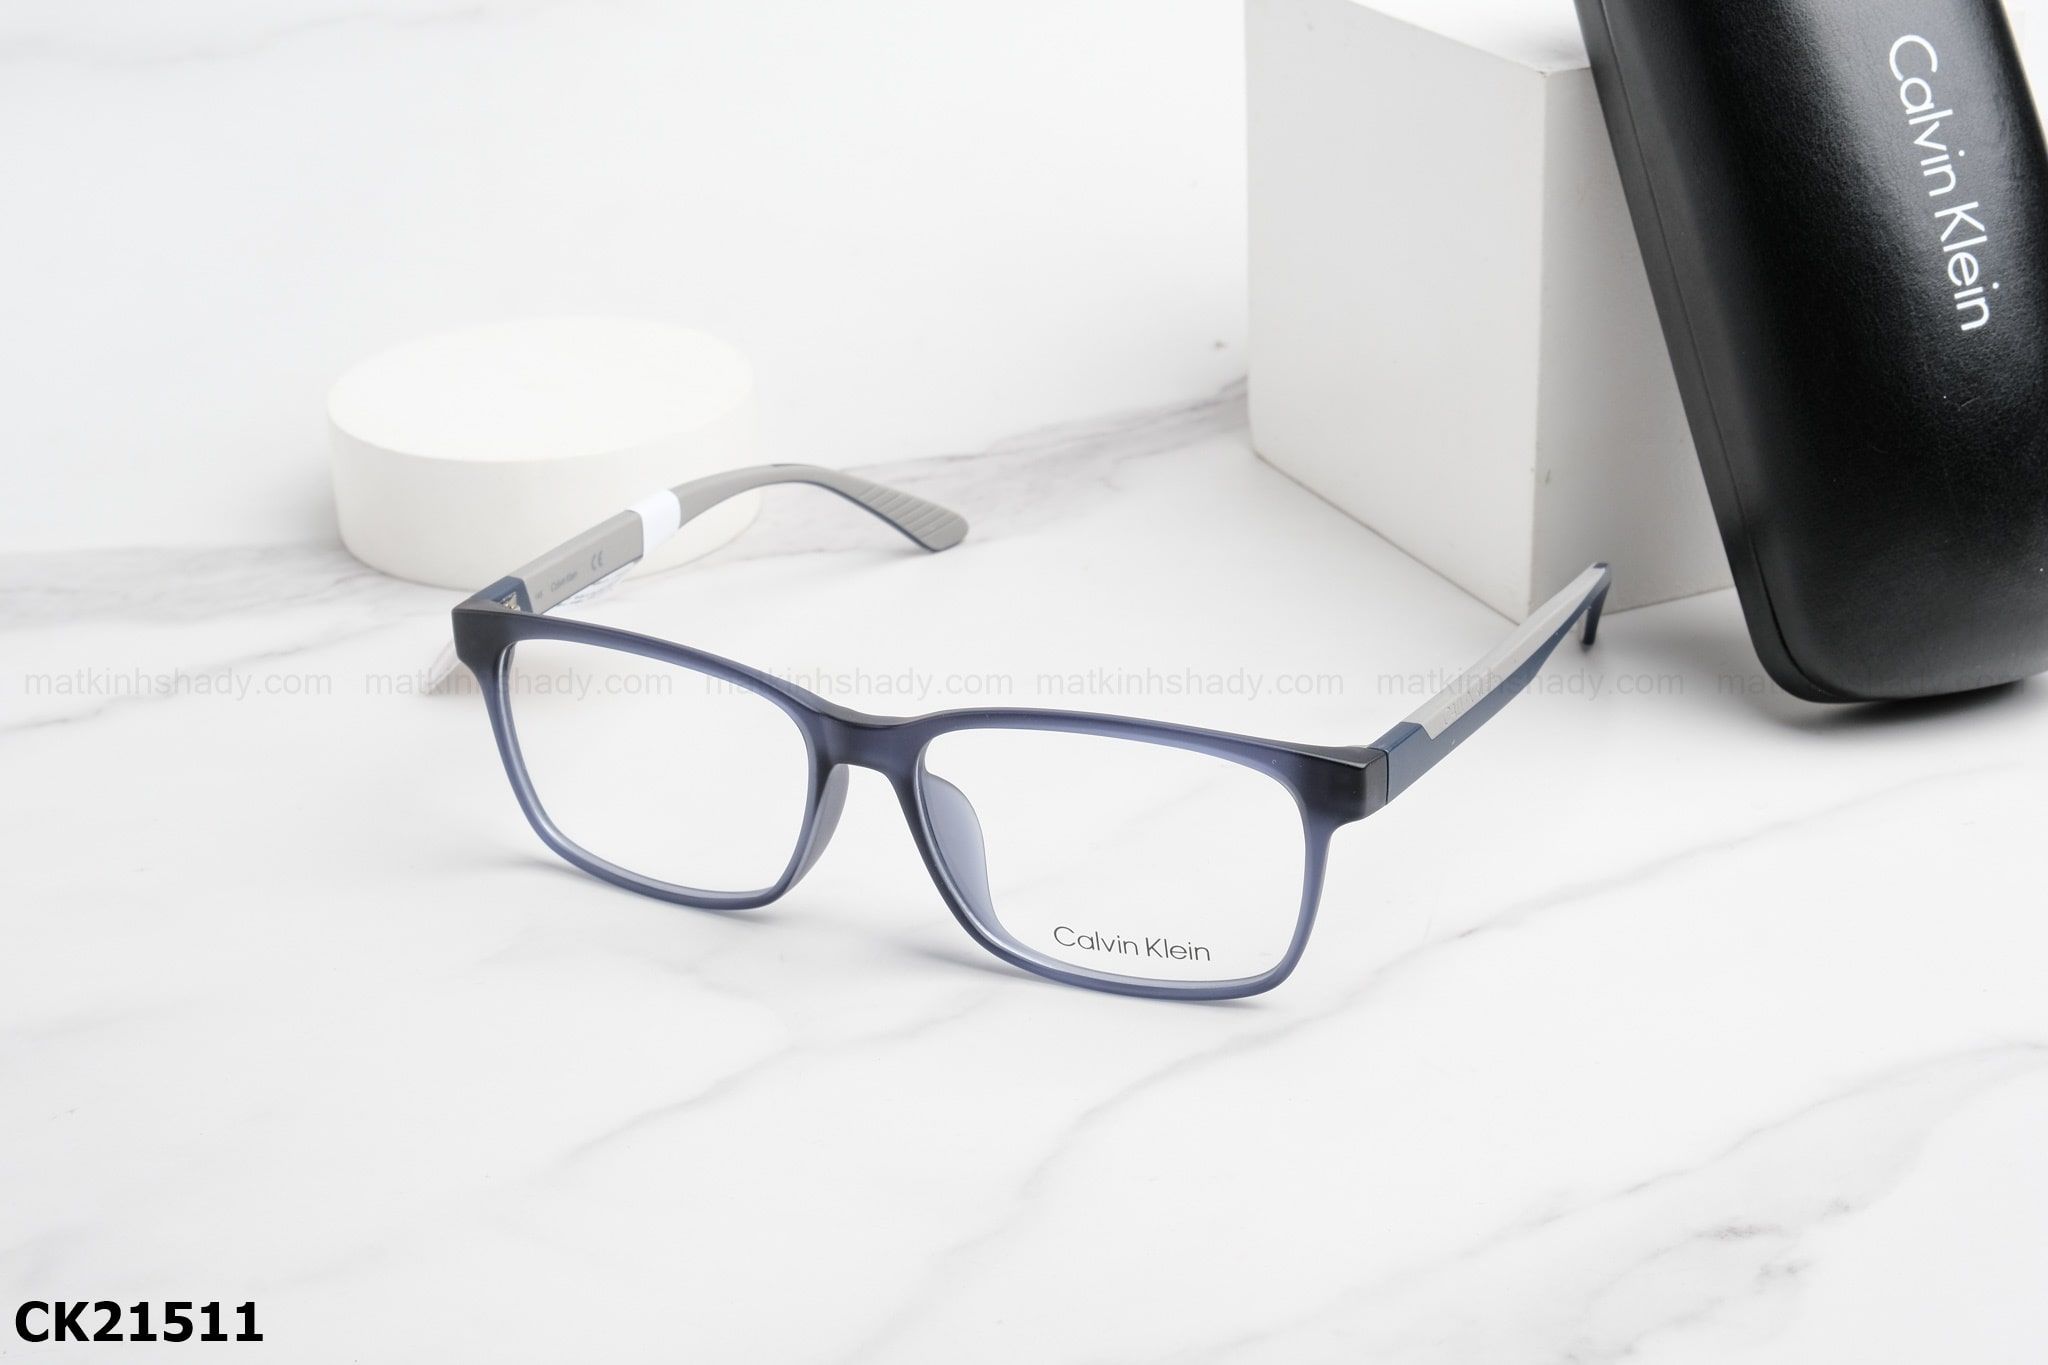  Calvin Klein Eyewear - Glasses - CK21511 